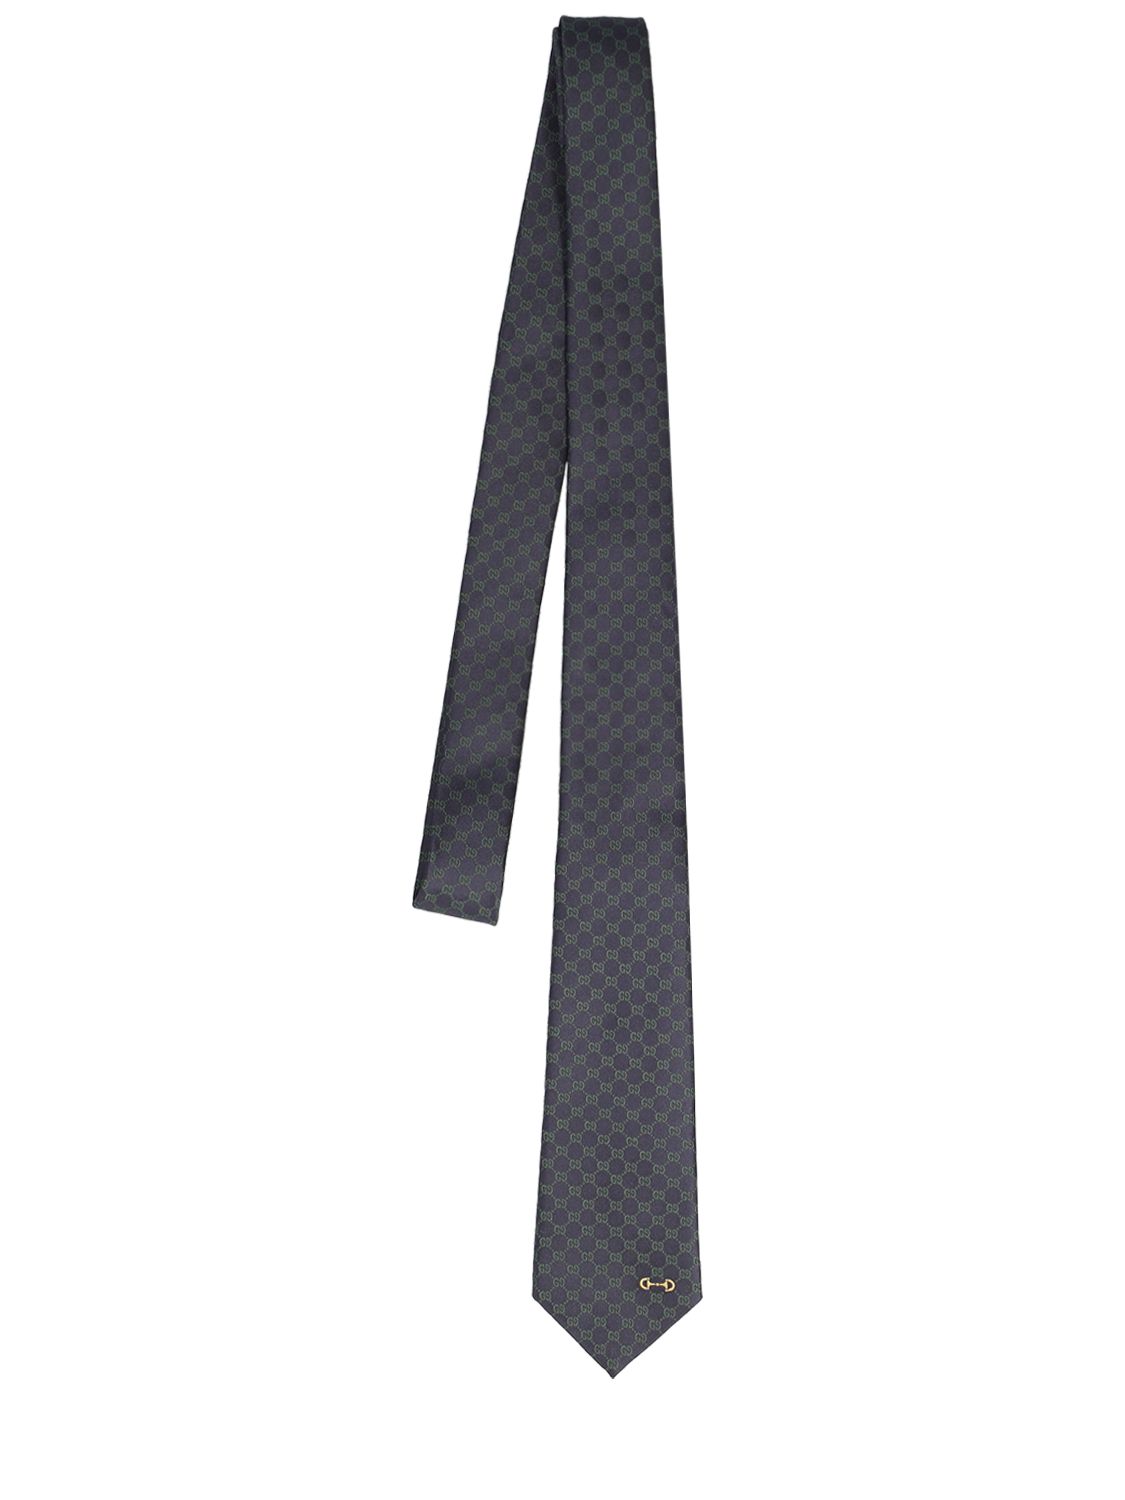 Cravate En Soie Jacquard Gg Mono Horsebit 7 Cm - GUCCI - Modalova